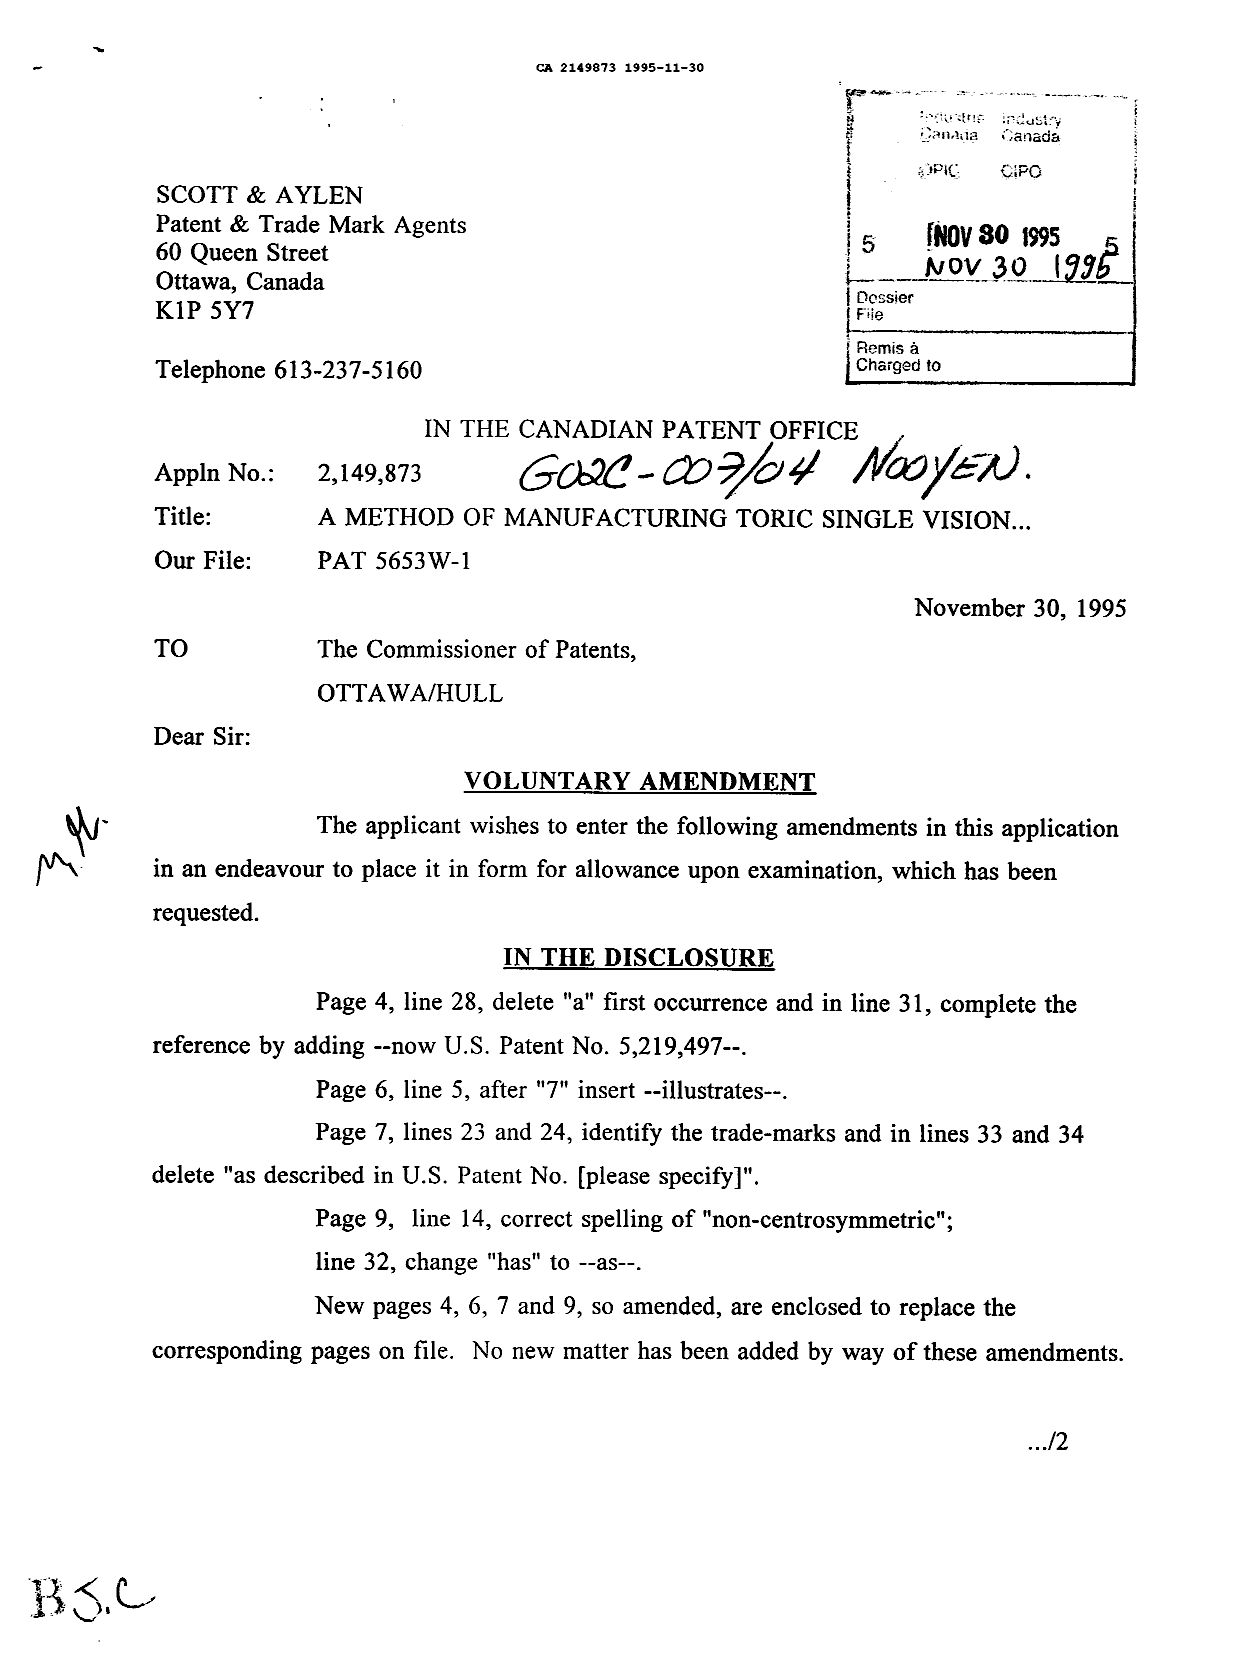 Canadian Patent Document 2149873. Prosecution-Amendment 19941230. Image 1 of 2